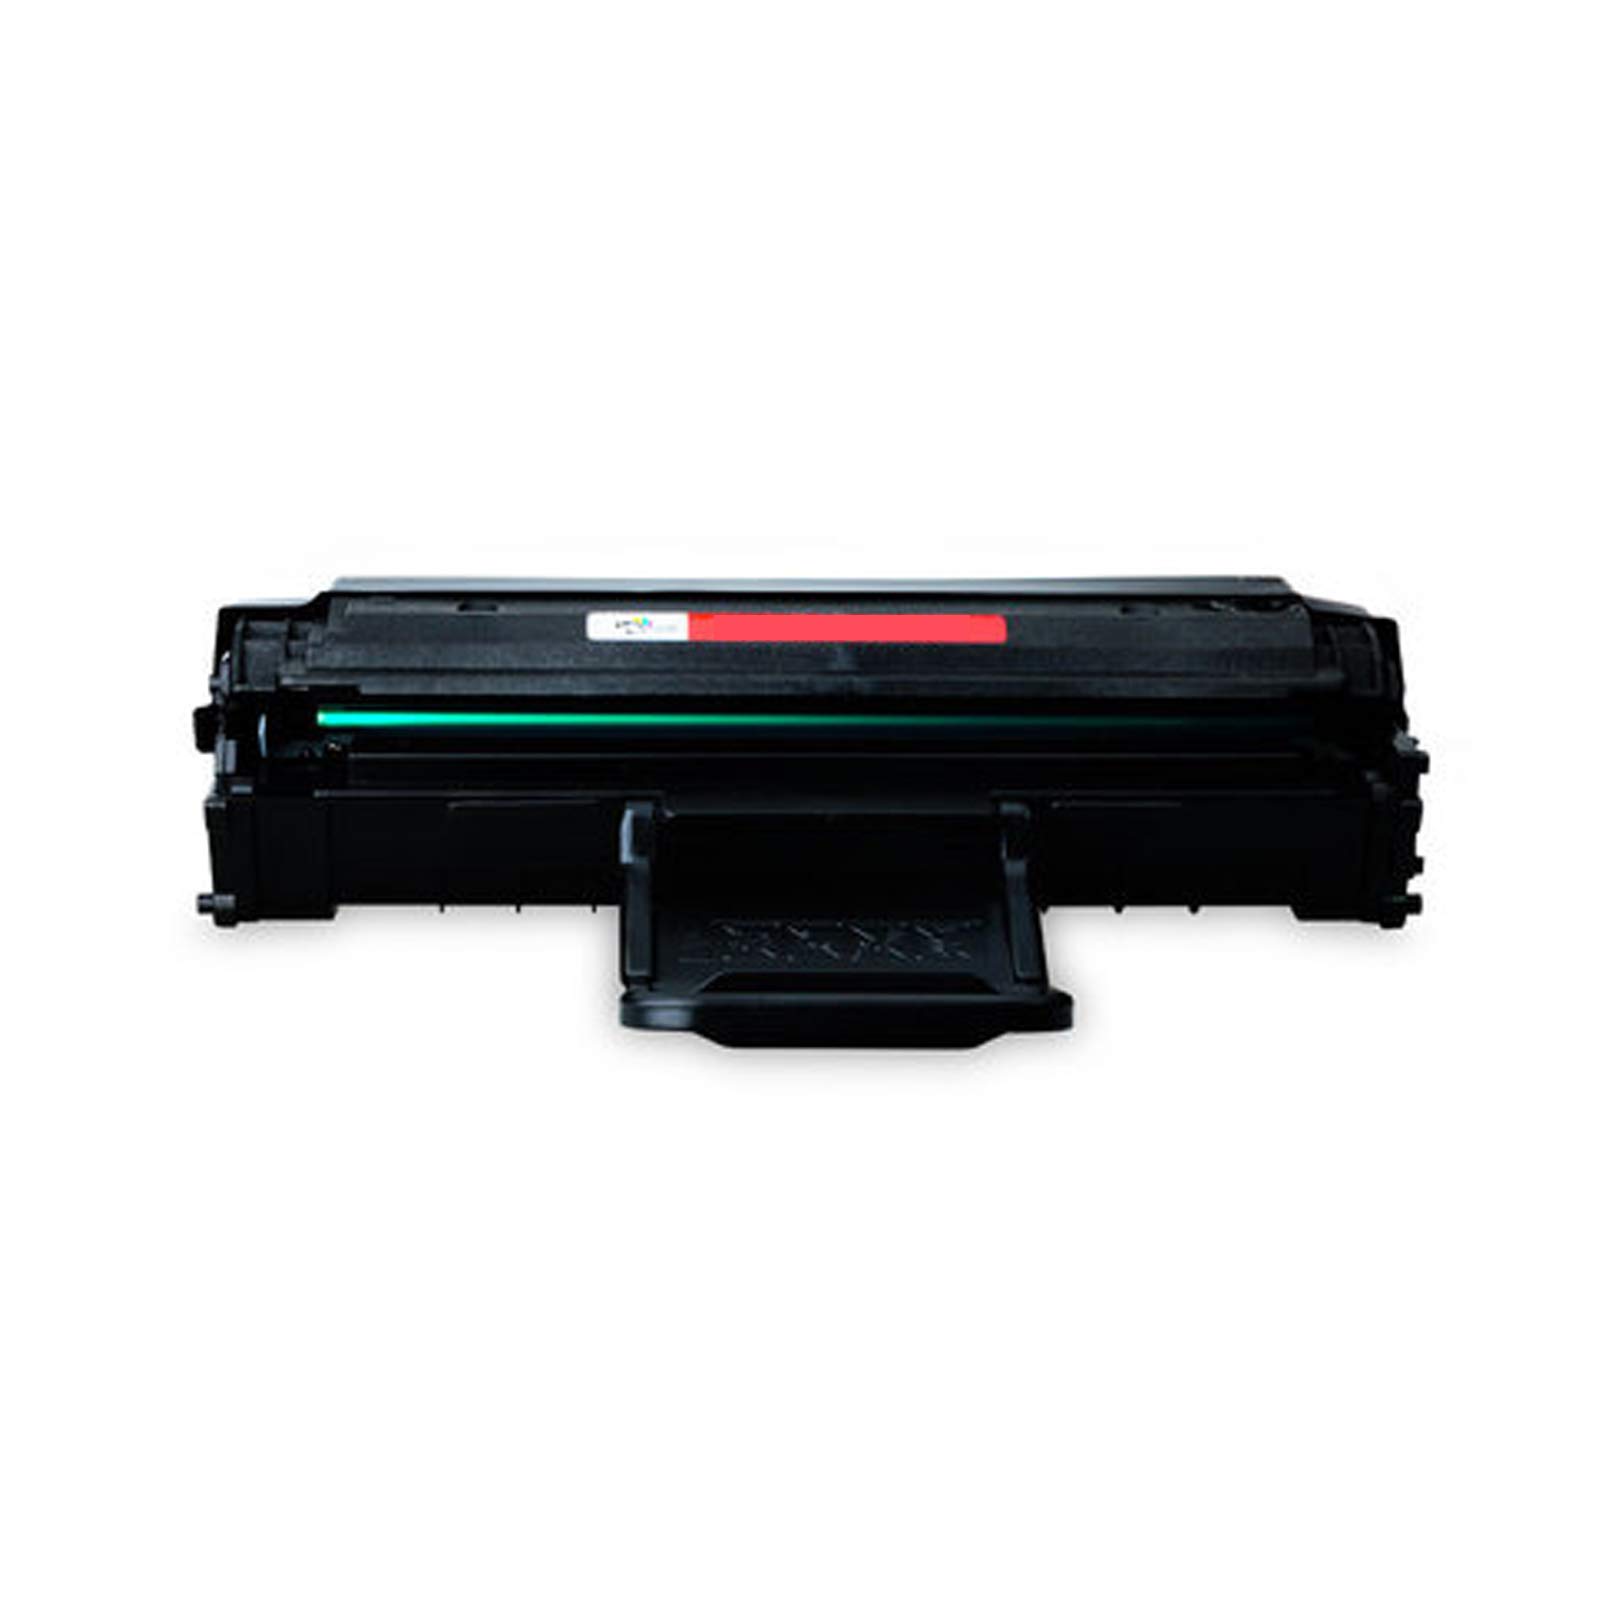 Samsung ML-1640 Laser Printer series